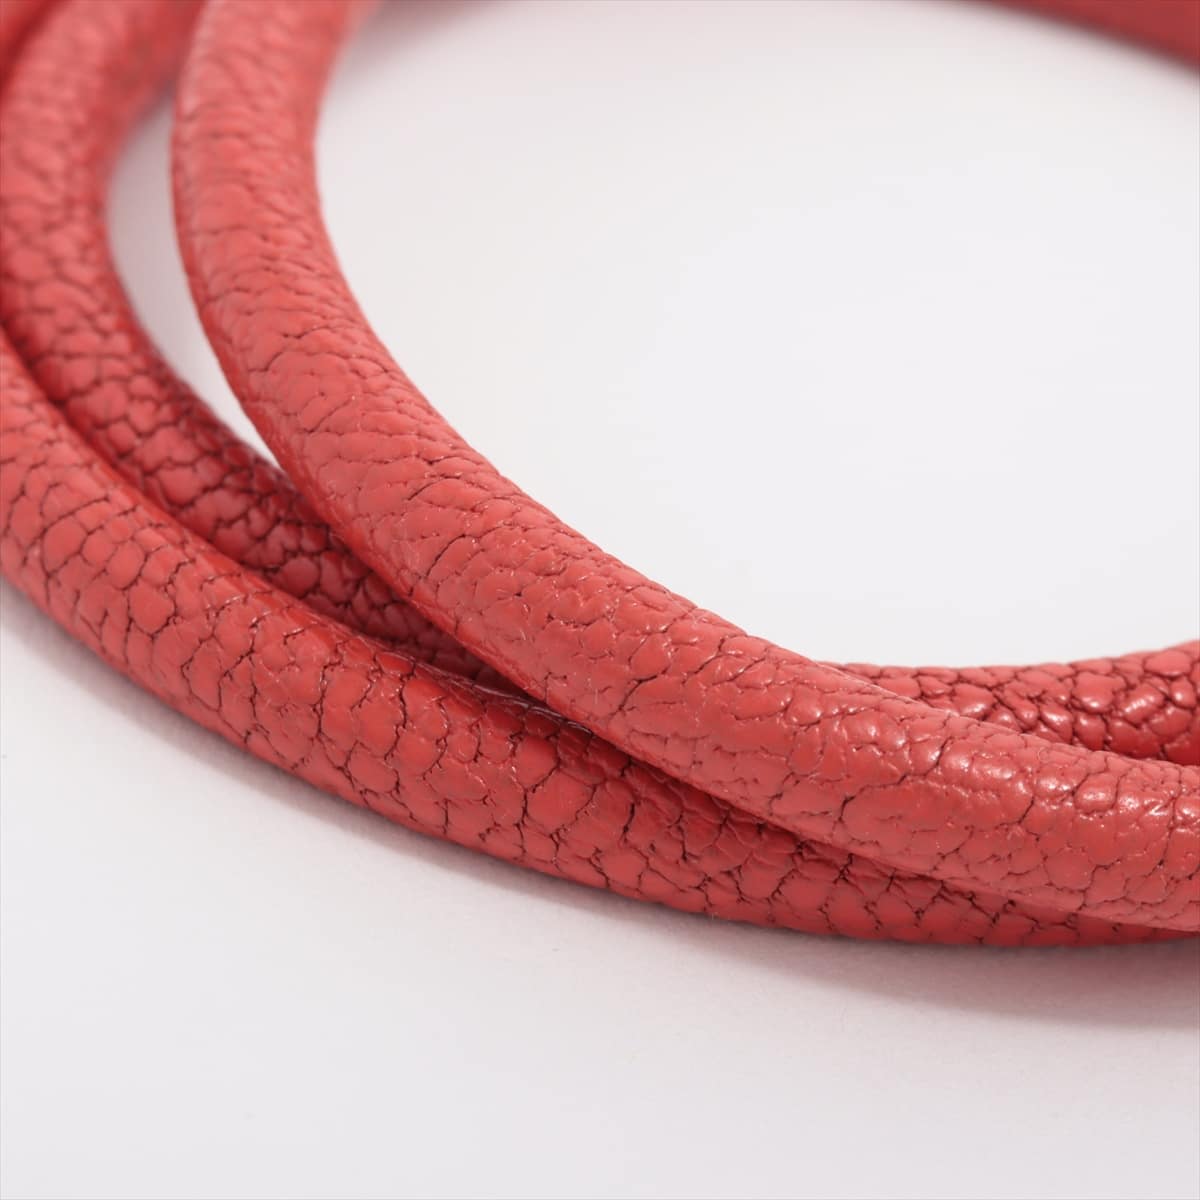 Loewe Anagram Bracelet GP & leather Red x gold